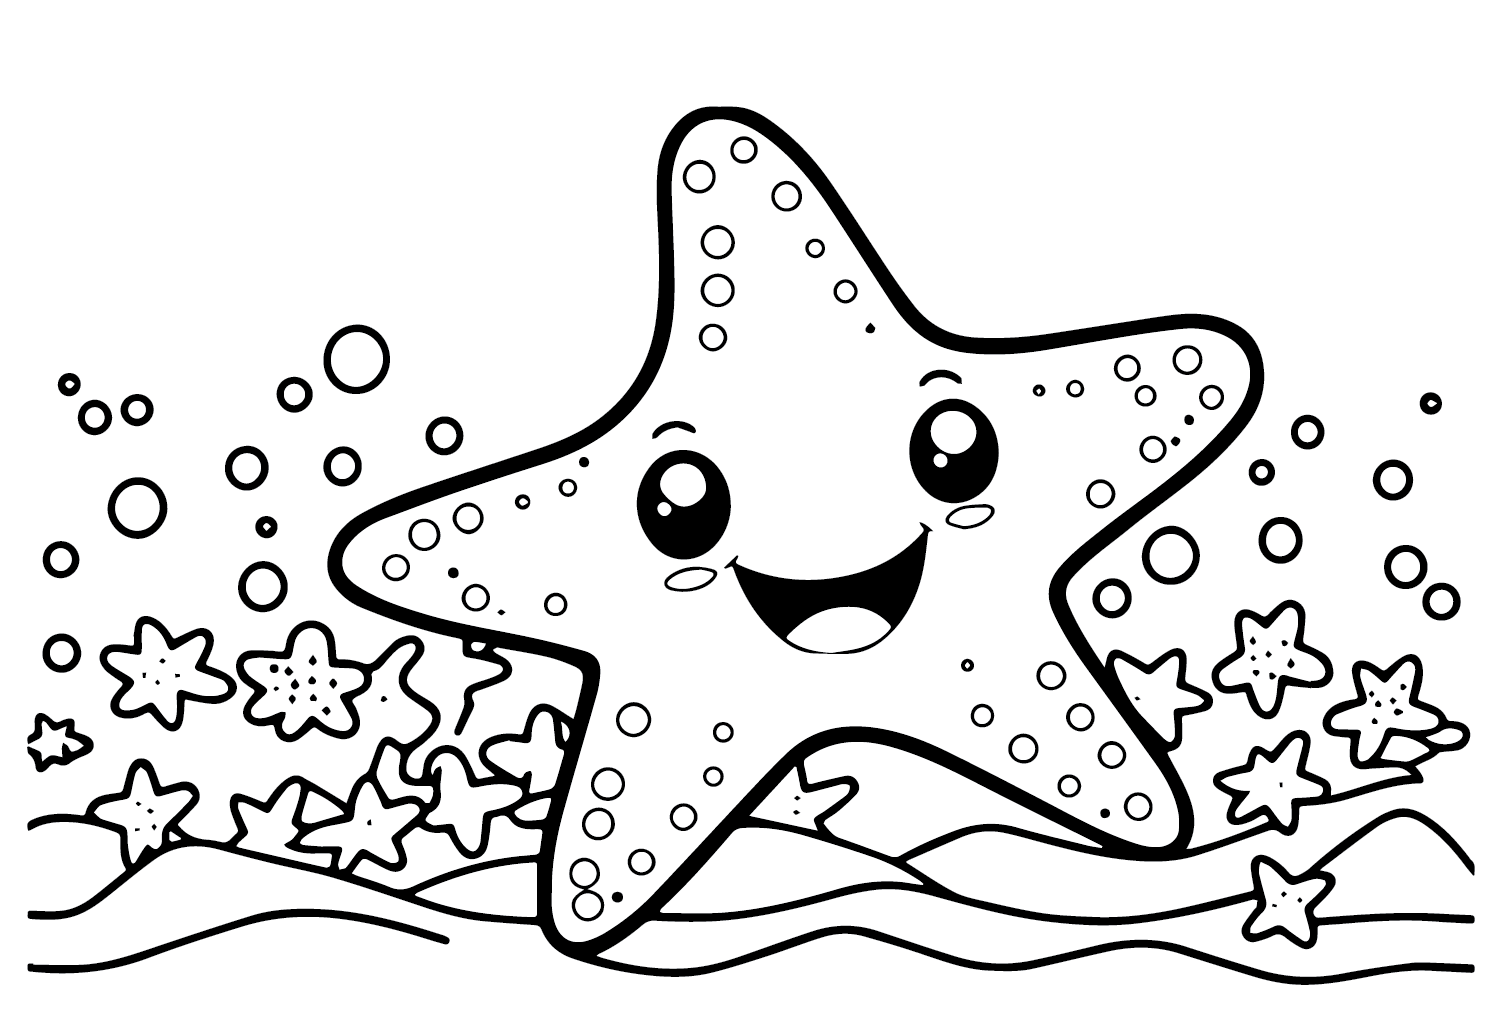 Feliz Estrela do Mar from Starfish